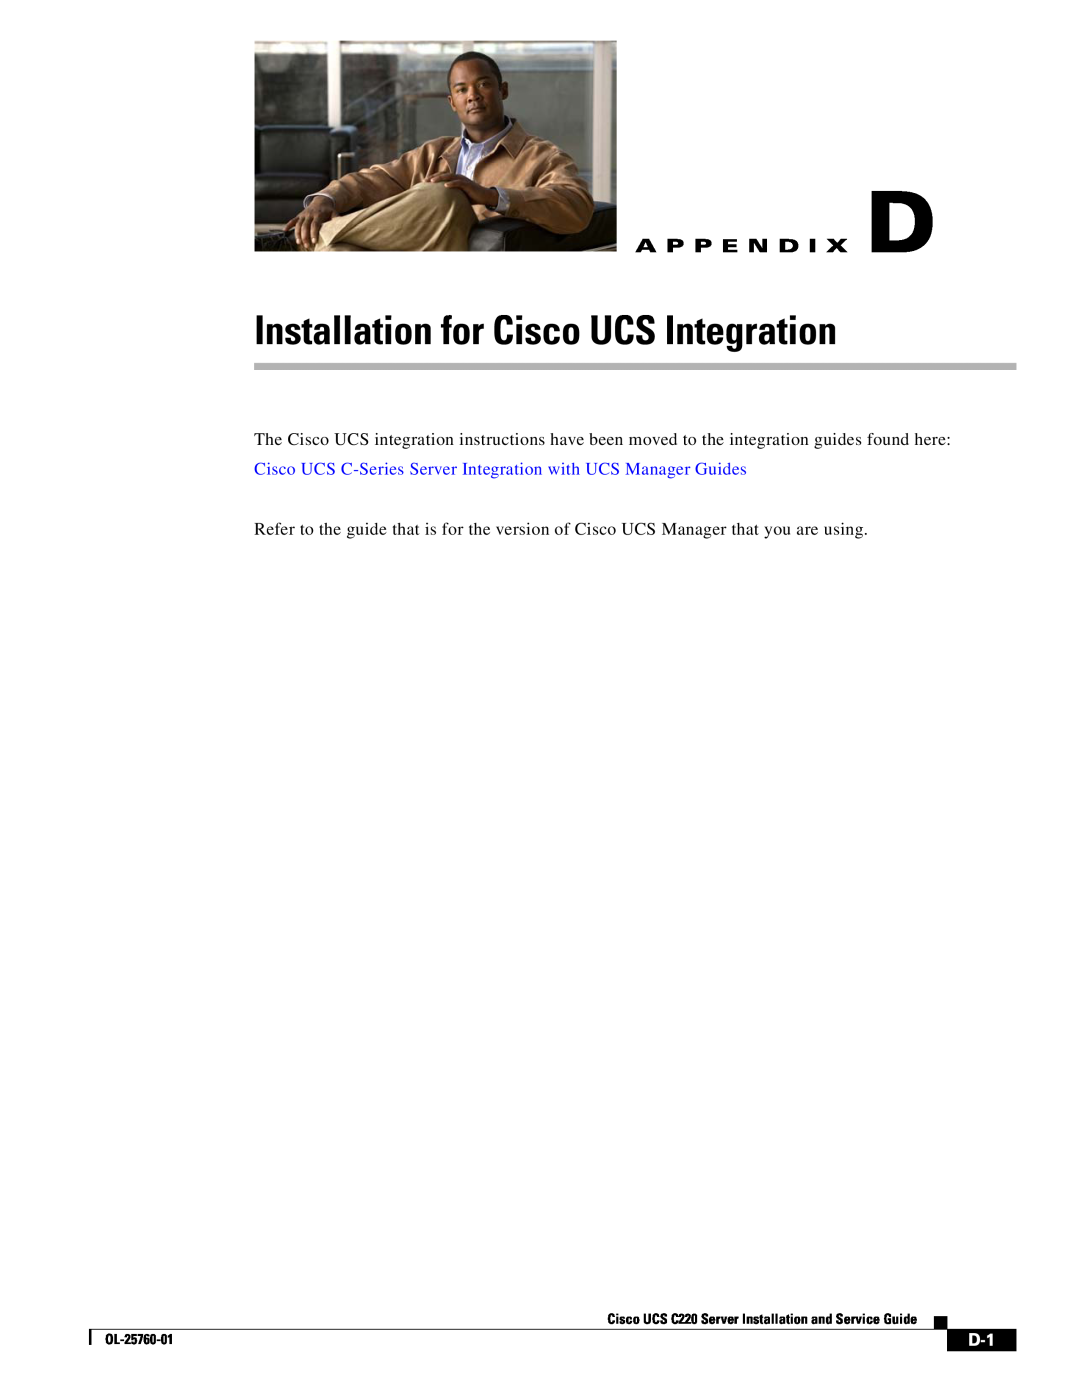 Cisco Systems UCSRAID9266CV, UCSSP6C220E, UCUCSEZC220M3S manual Installation for Cisco UCS Integration, A P P E N D I X D 